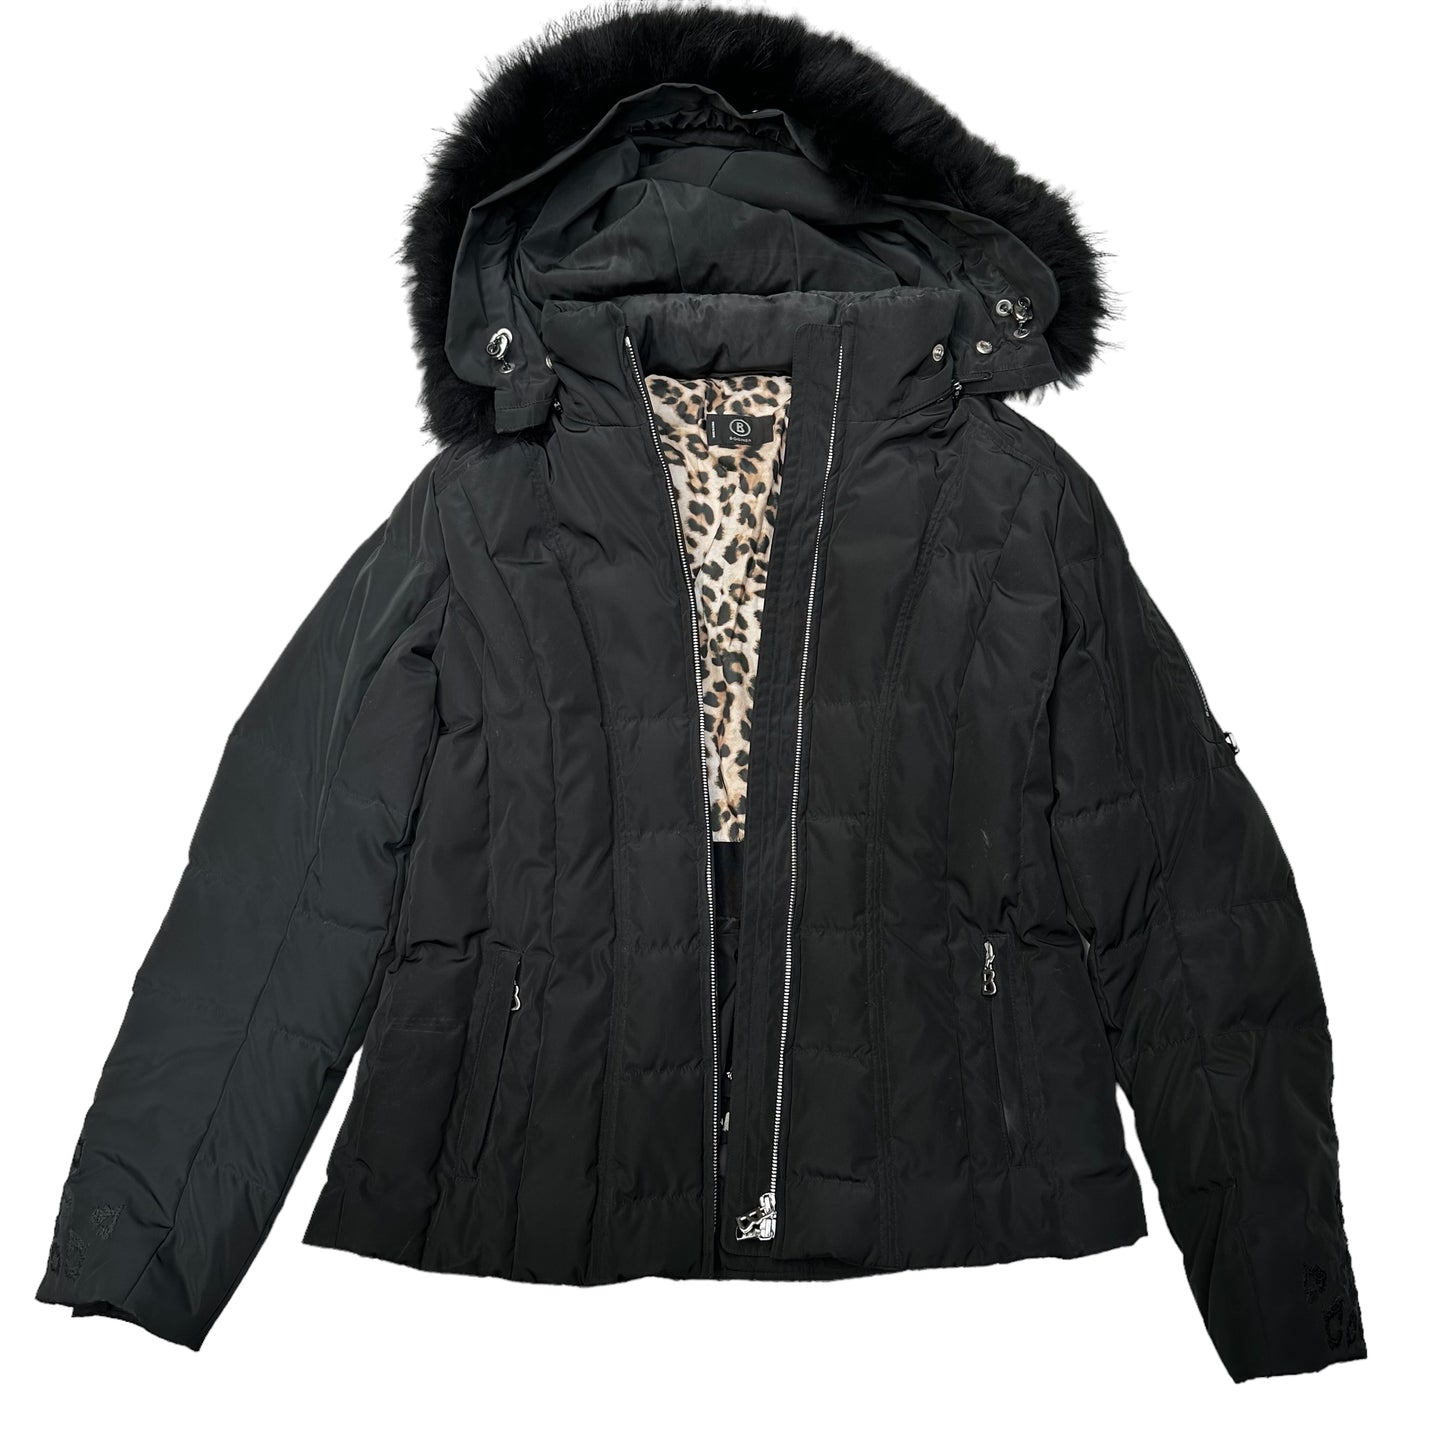 Black Ski Jacket with Fur - M